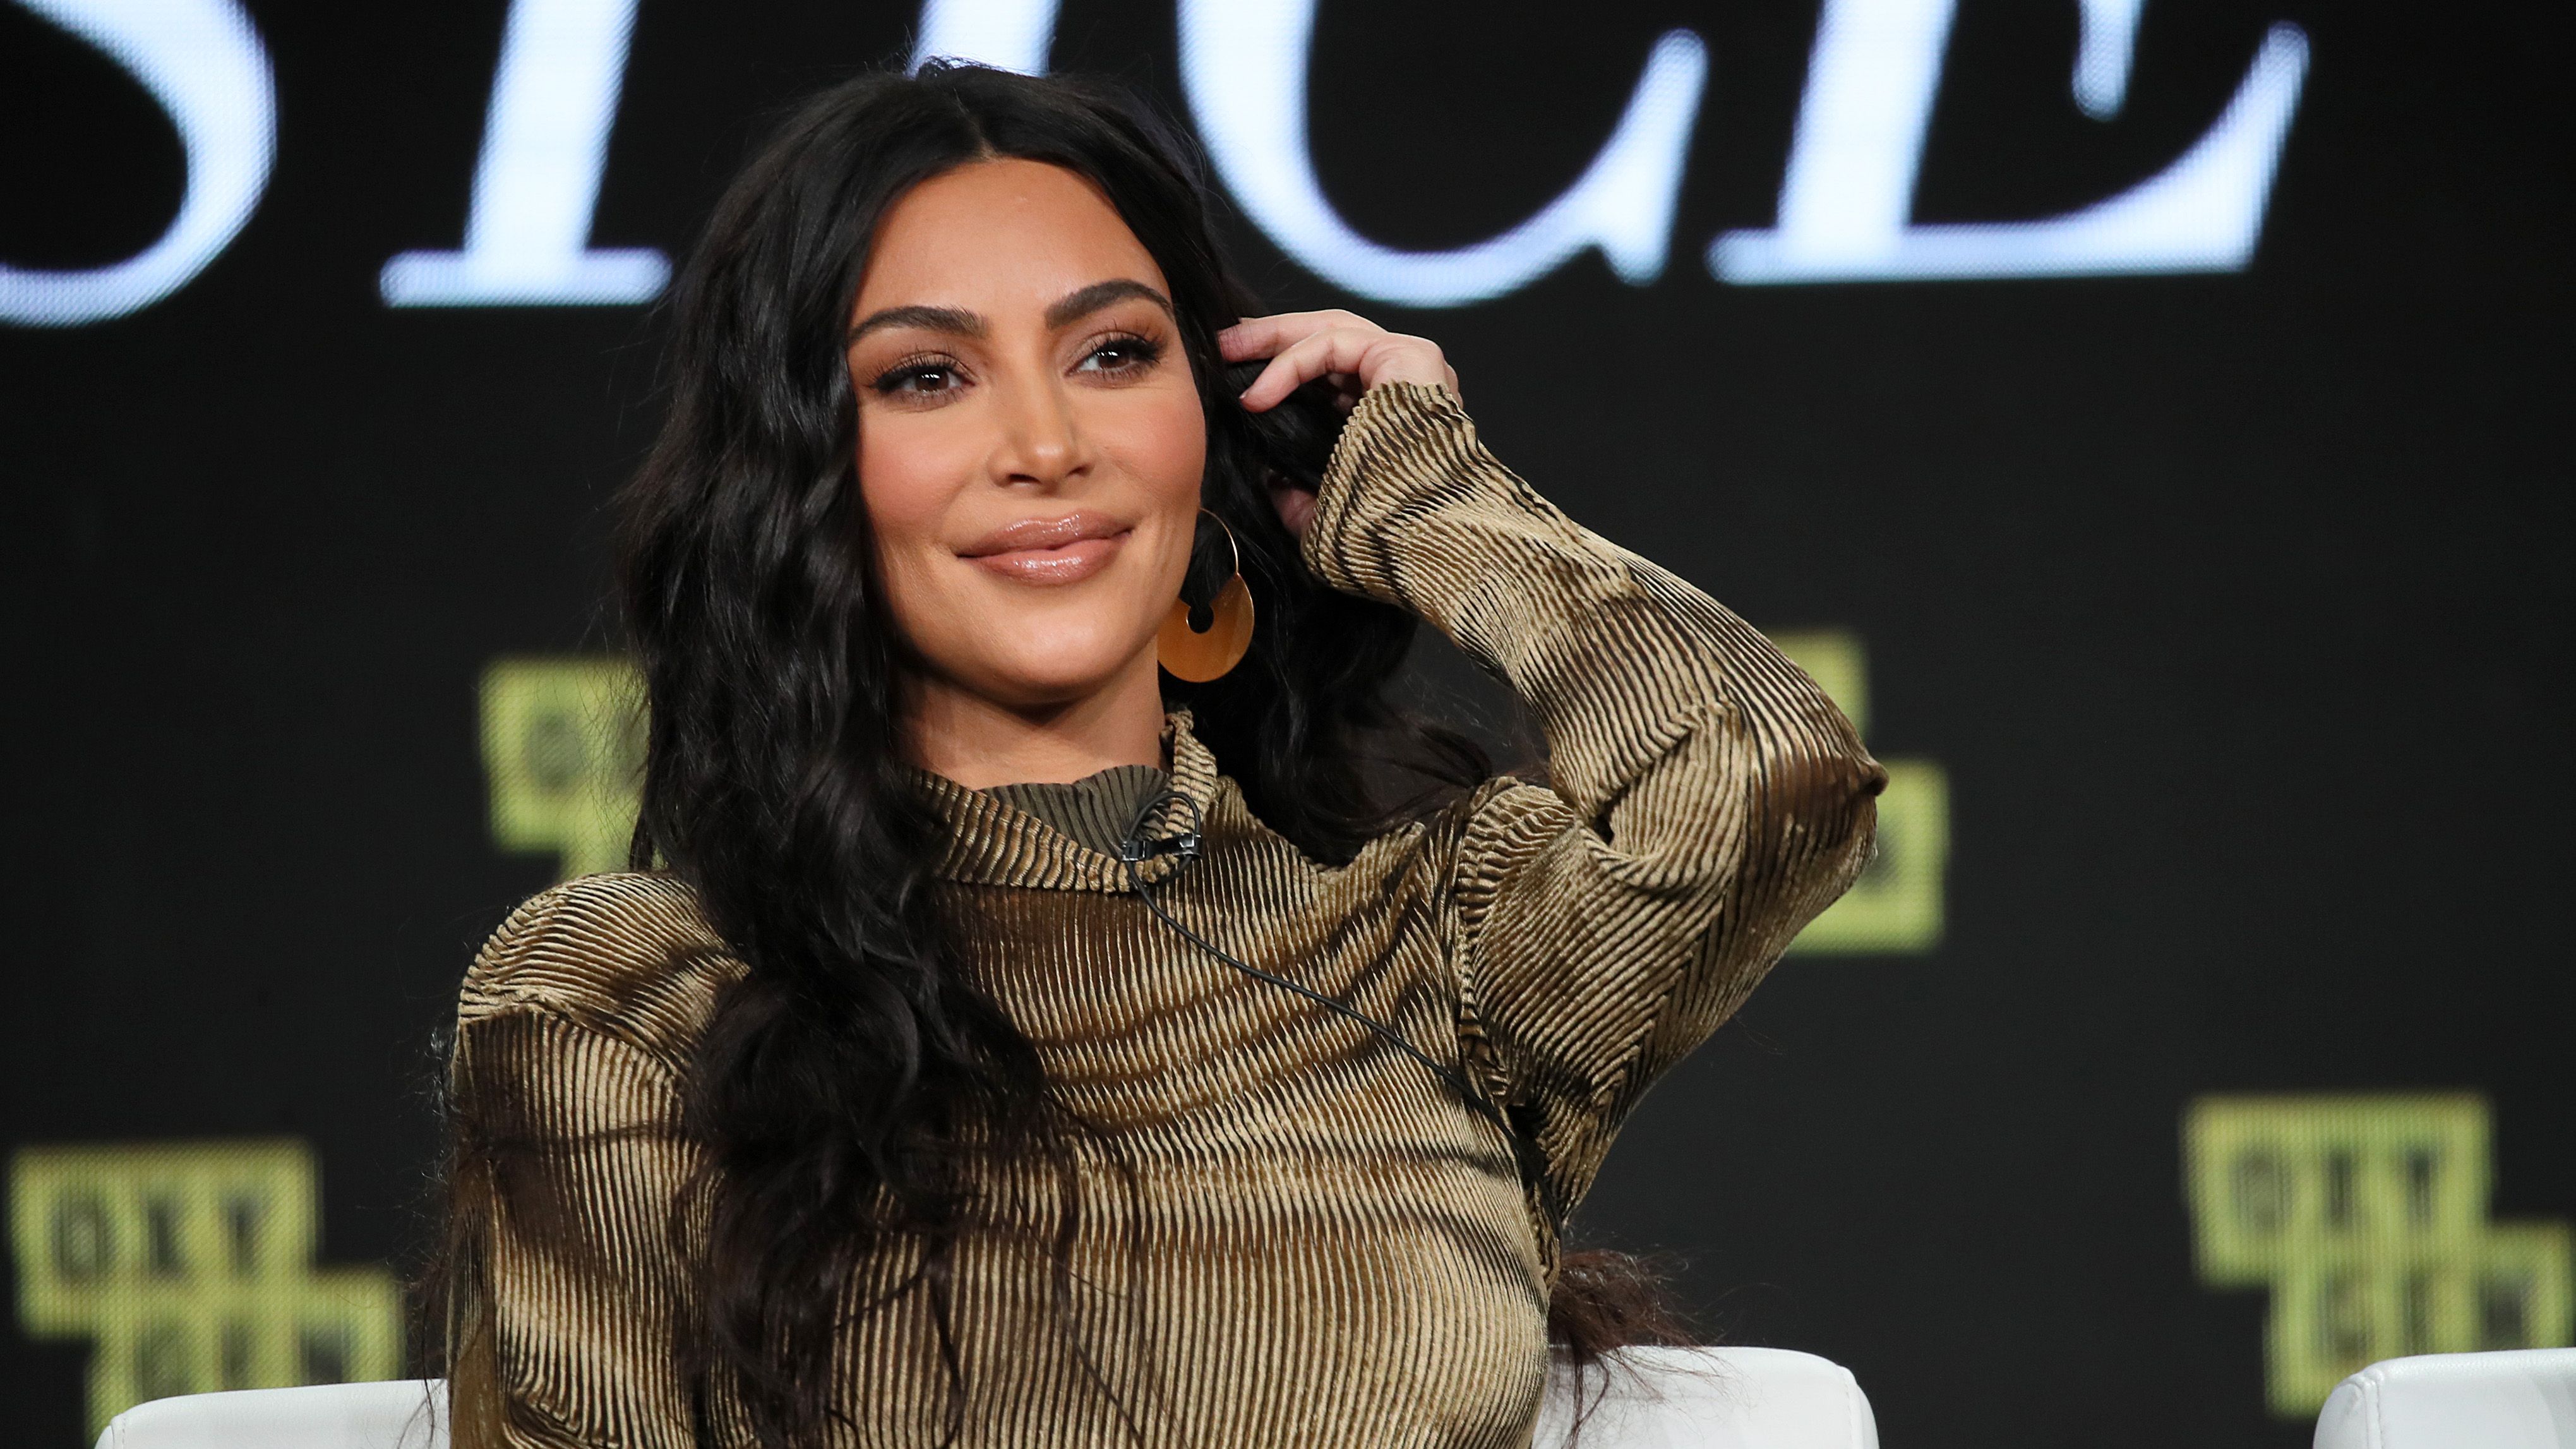 What Was Kim Kardashian West Wearing?